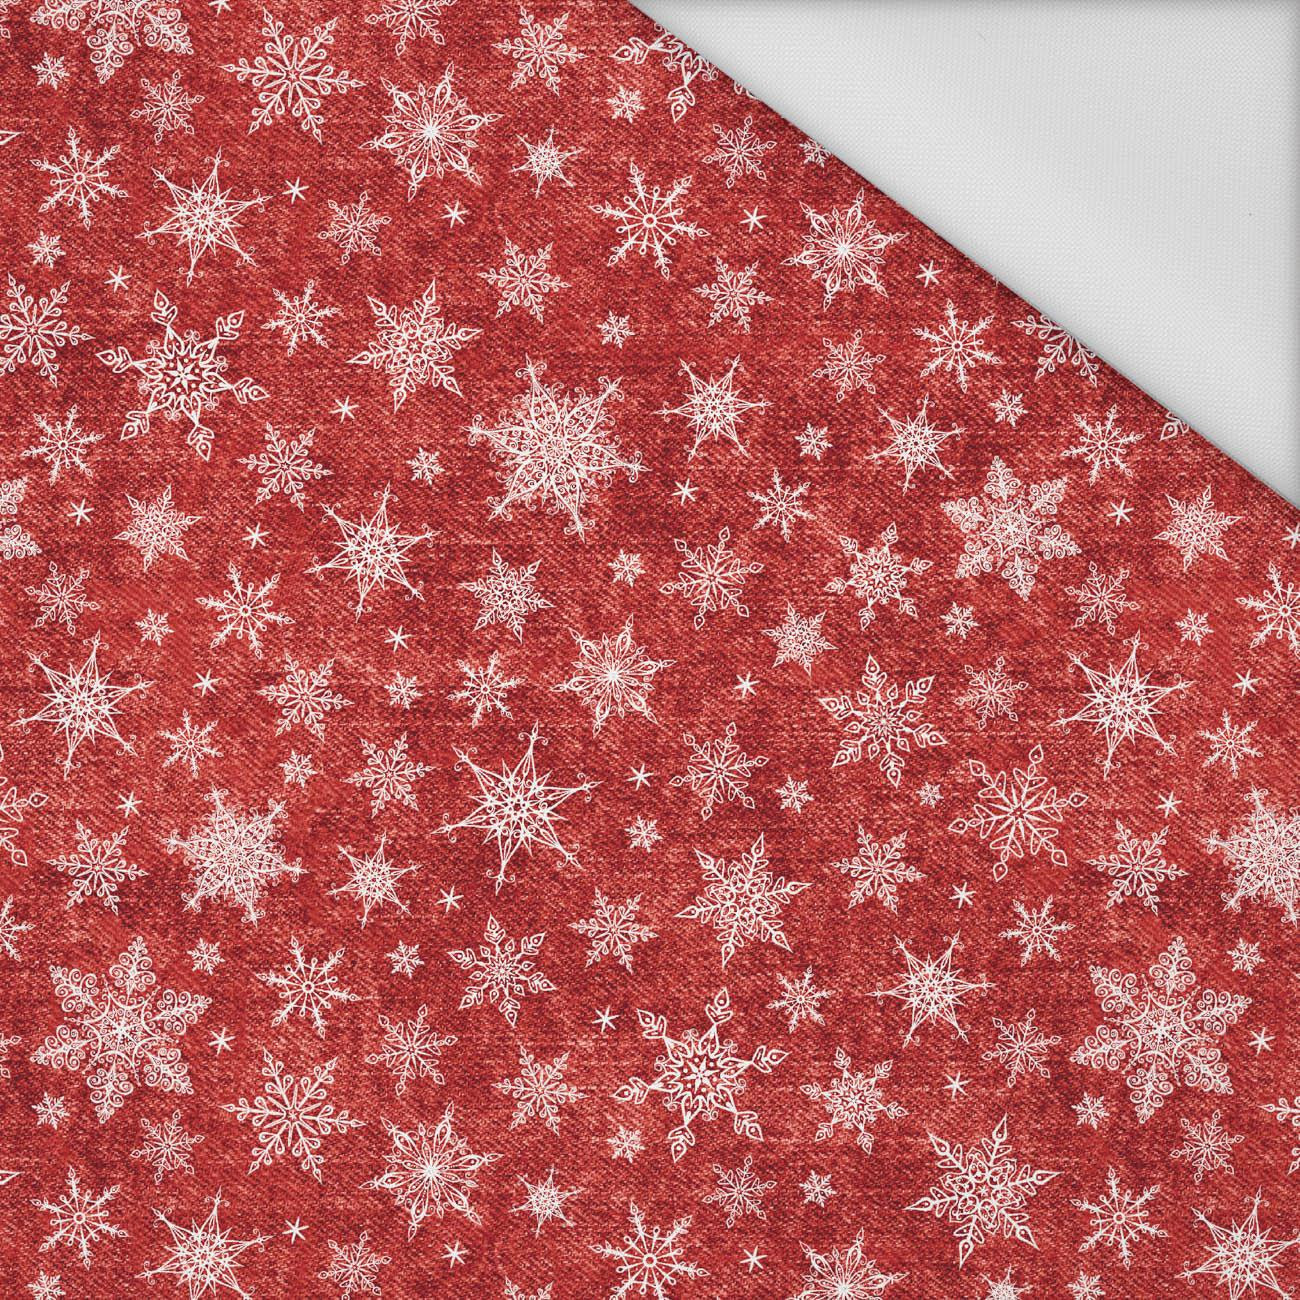 SNOWFLAKES PAT. 2 / ACID WASH RED - Waterproof woven fabric